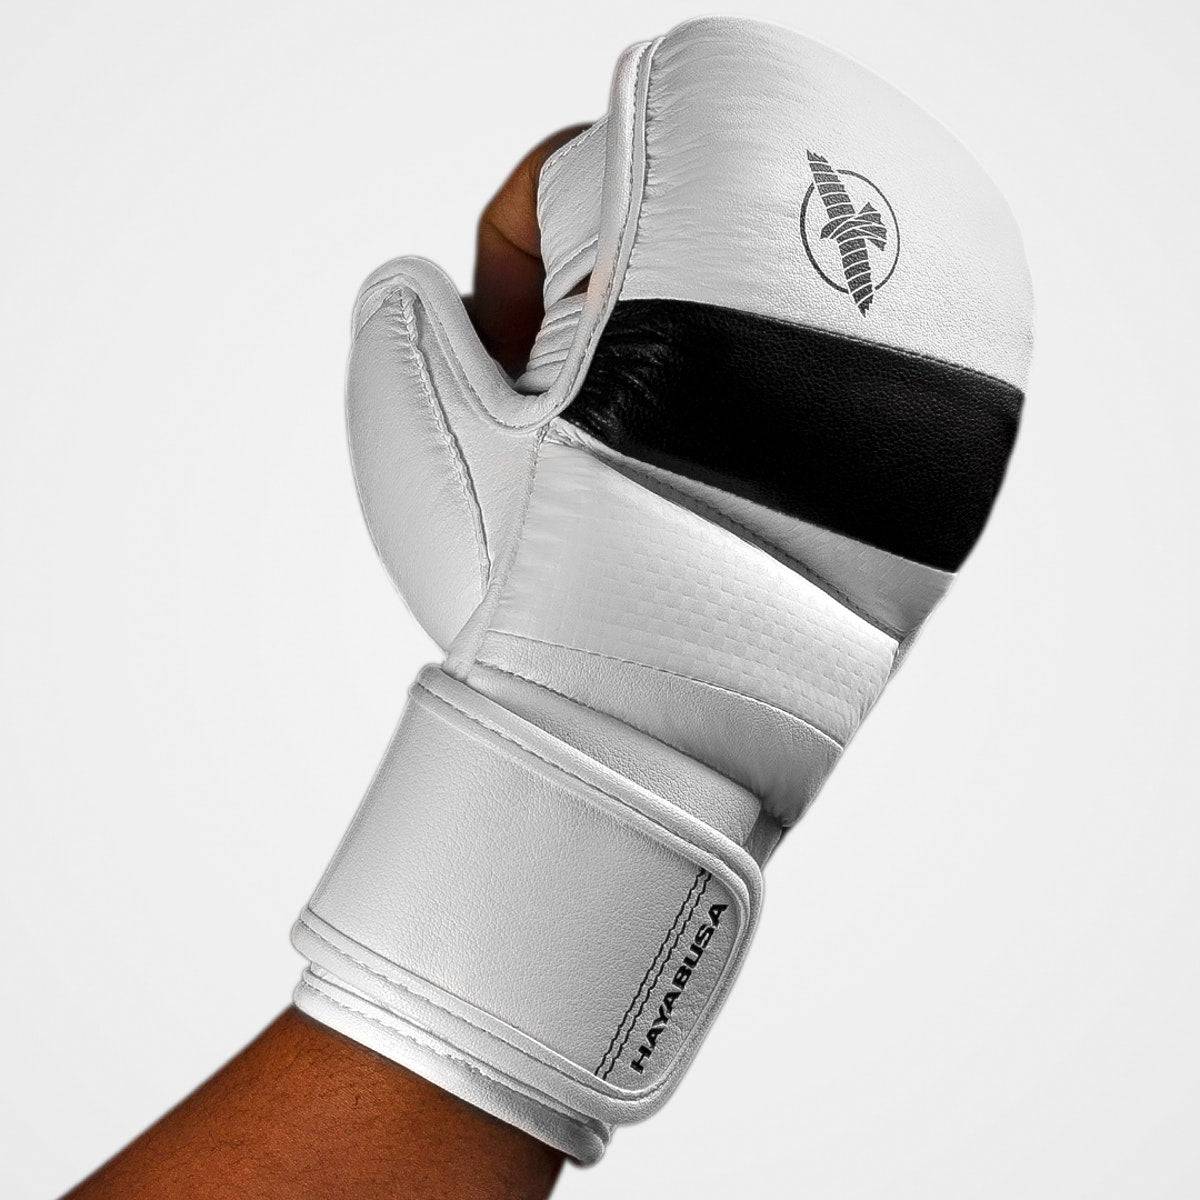 Hayabusa | Hybrid Gloves - T3 - 7oz - XTC Fitness - Exercise Equipment Superstore - Canada - Hybrid Gloves